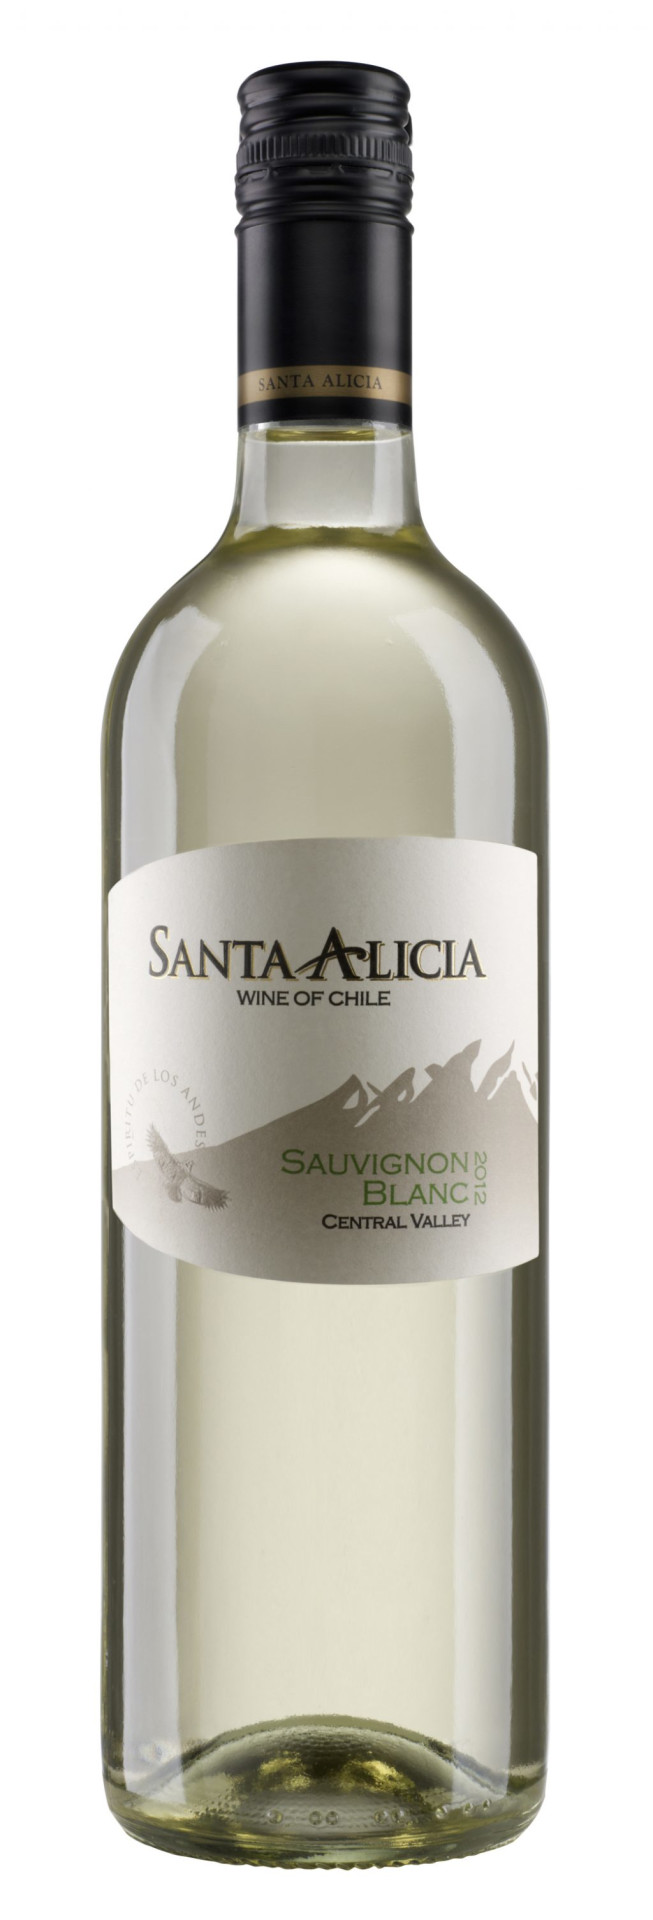 Santa Alicia Sauvignon Blanc Varietal chilei minőségi fehérbor 0.75l